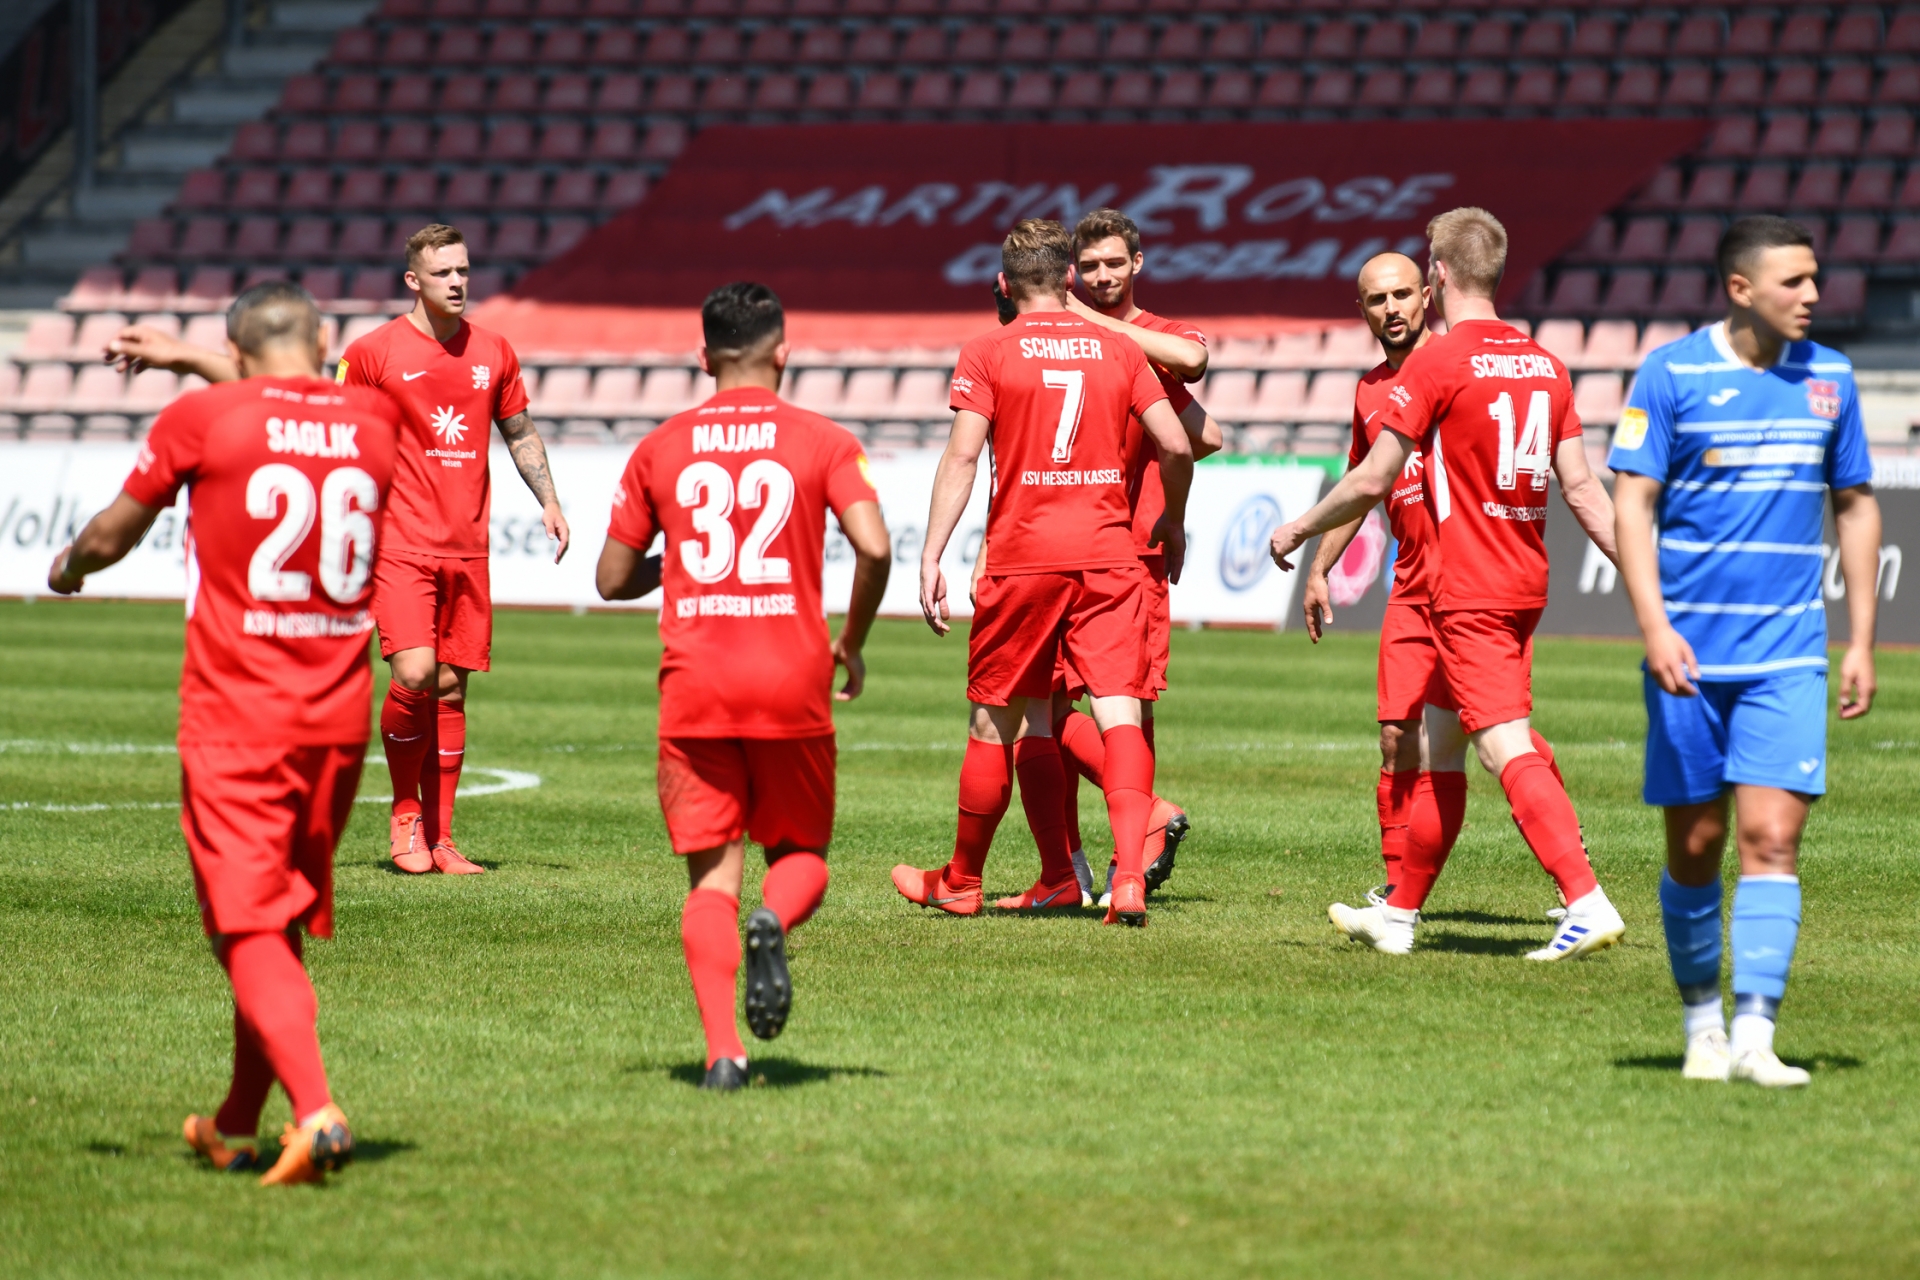 Lotto Hessenliga 2018/2019, KSV Hessen Kassel, Türk Gücü Friedberg, Endstand 4:0, Jubel zum 3:0